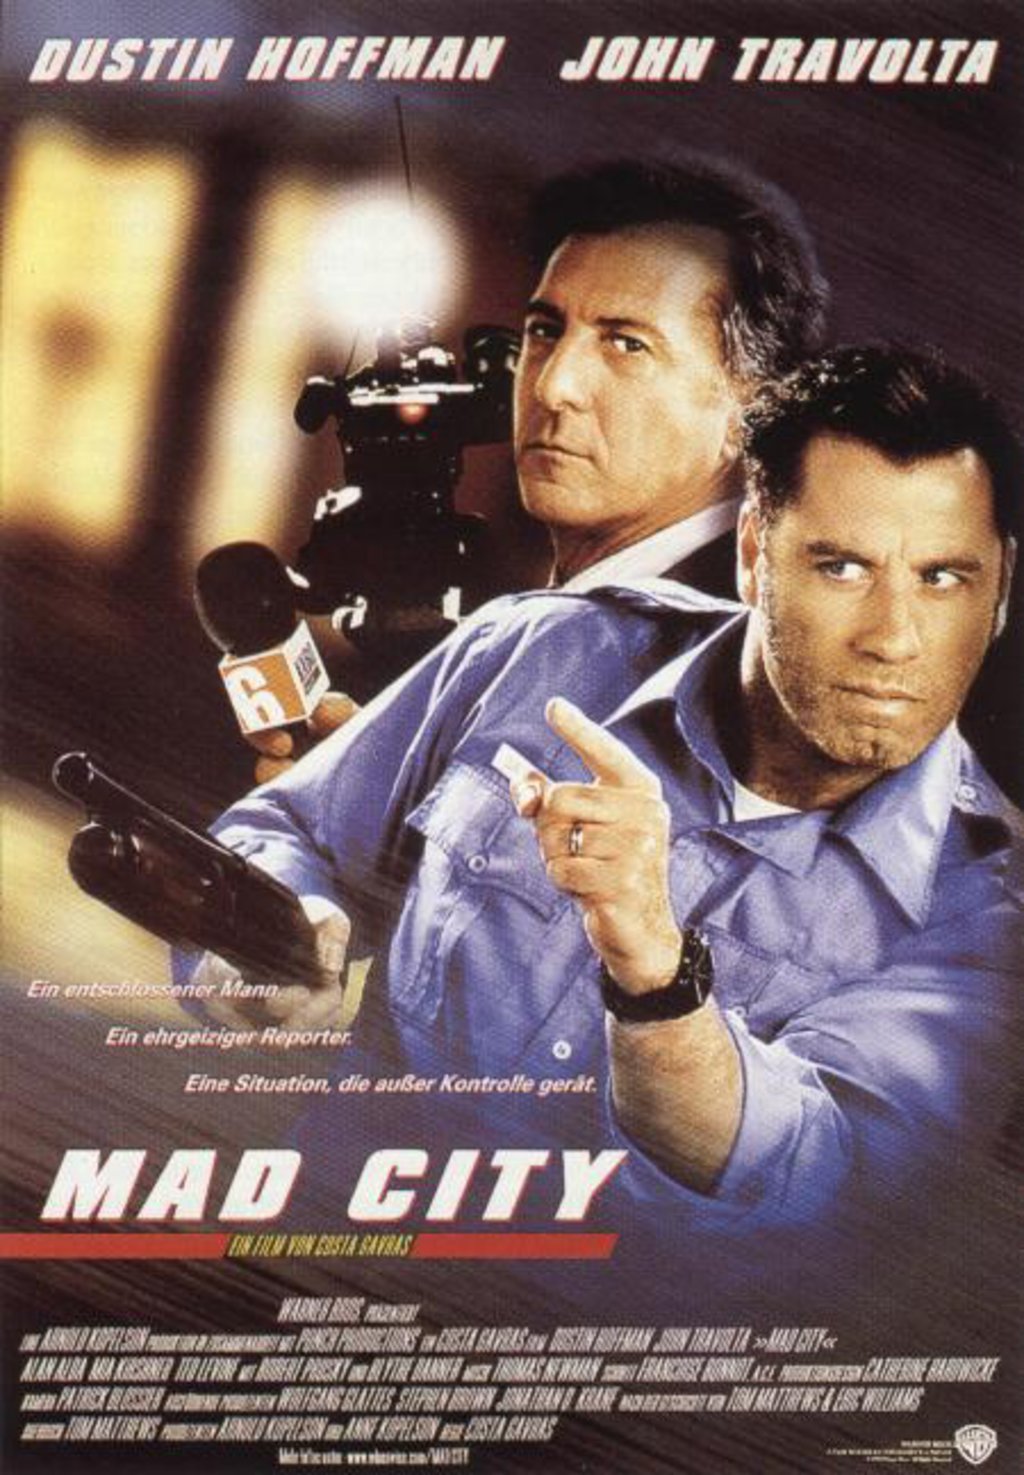 Dustin Hoffman and John Travolta in Mad City (1997)